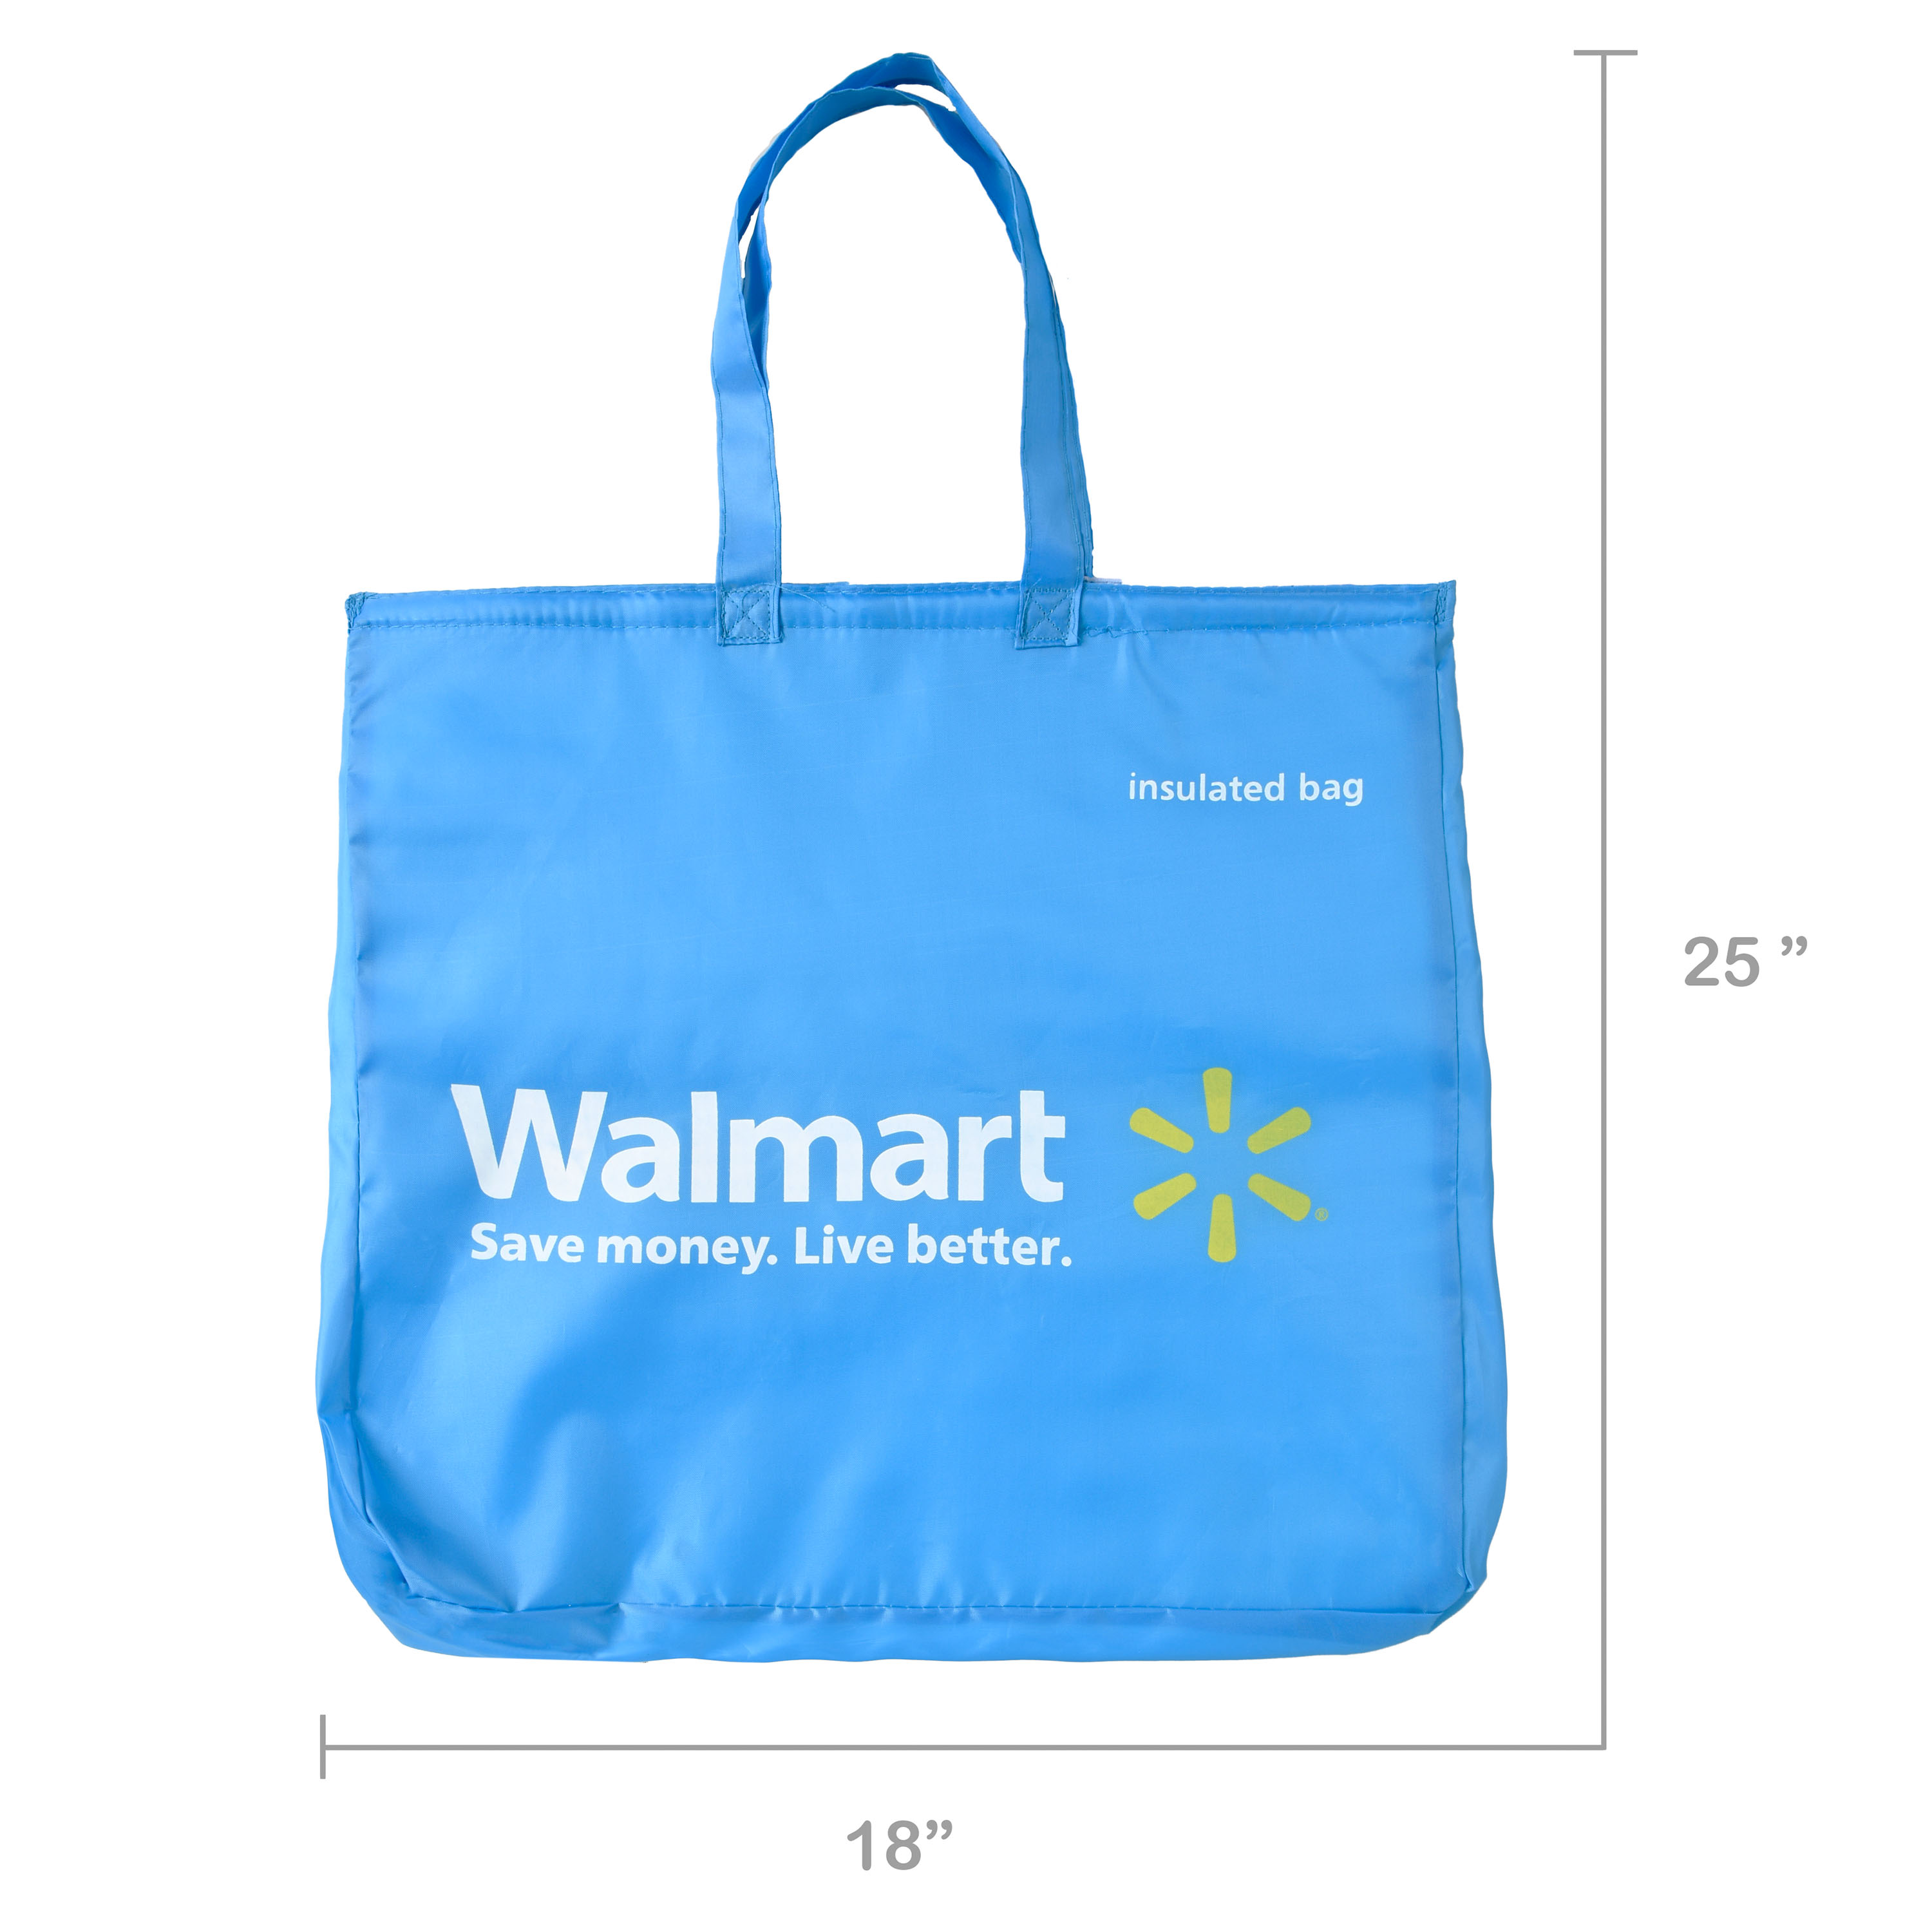 Walmart Reusable Insulated Polyethylene Grocery Bag, Blue - image 3 of 3